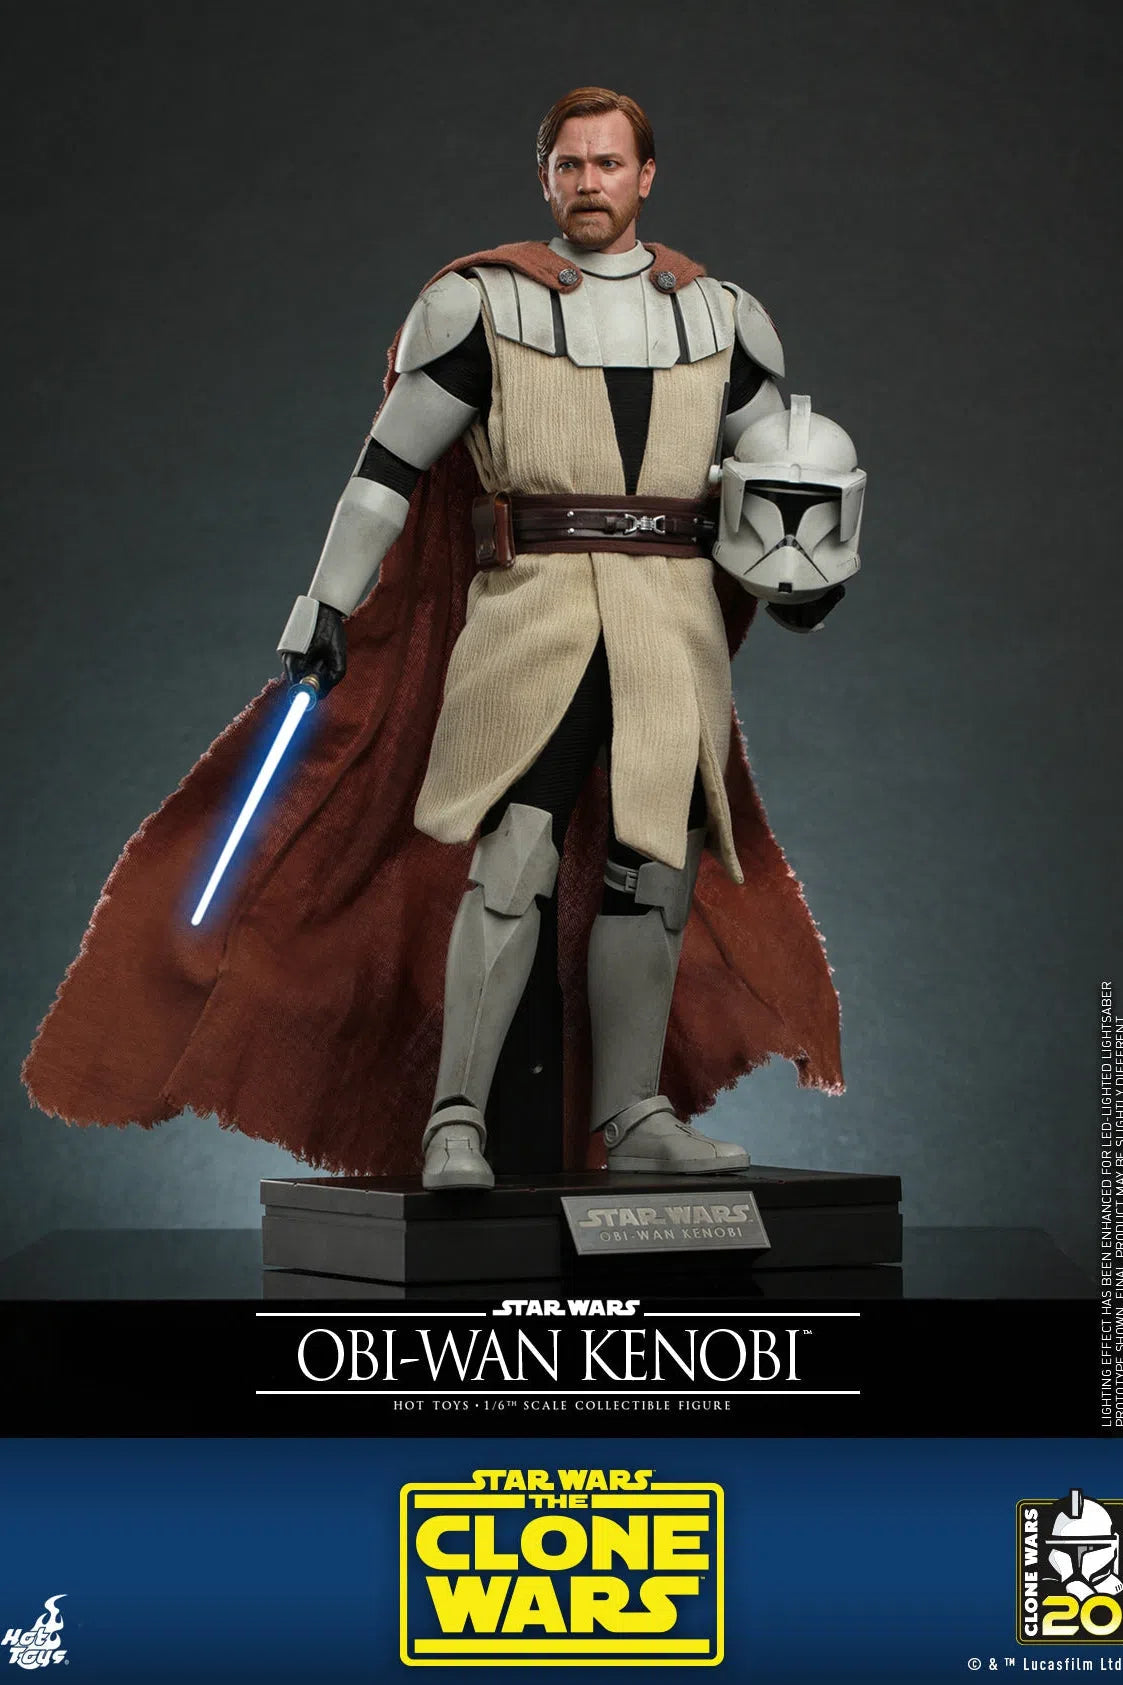 Obi-Wan Kenobi: Star Wars Episode II: Attack Of The Clones